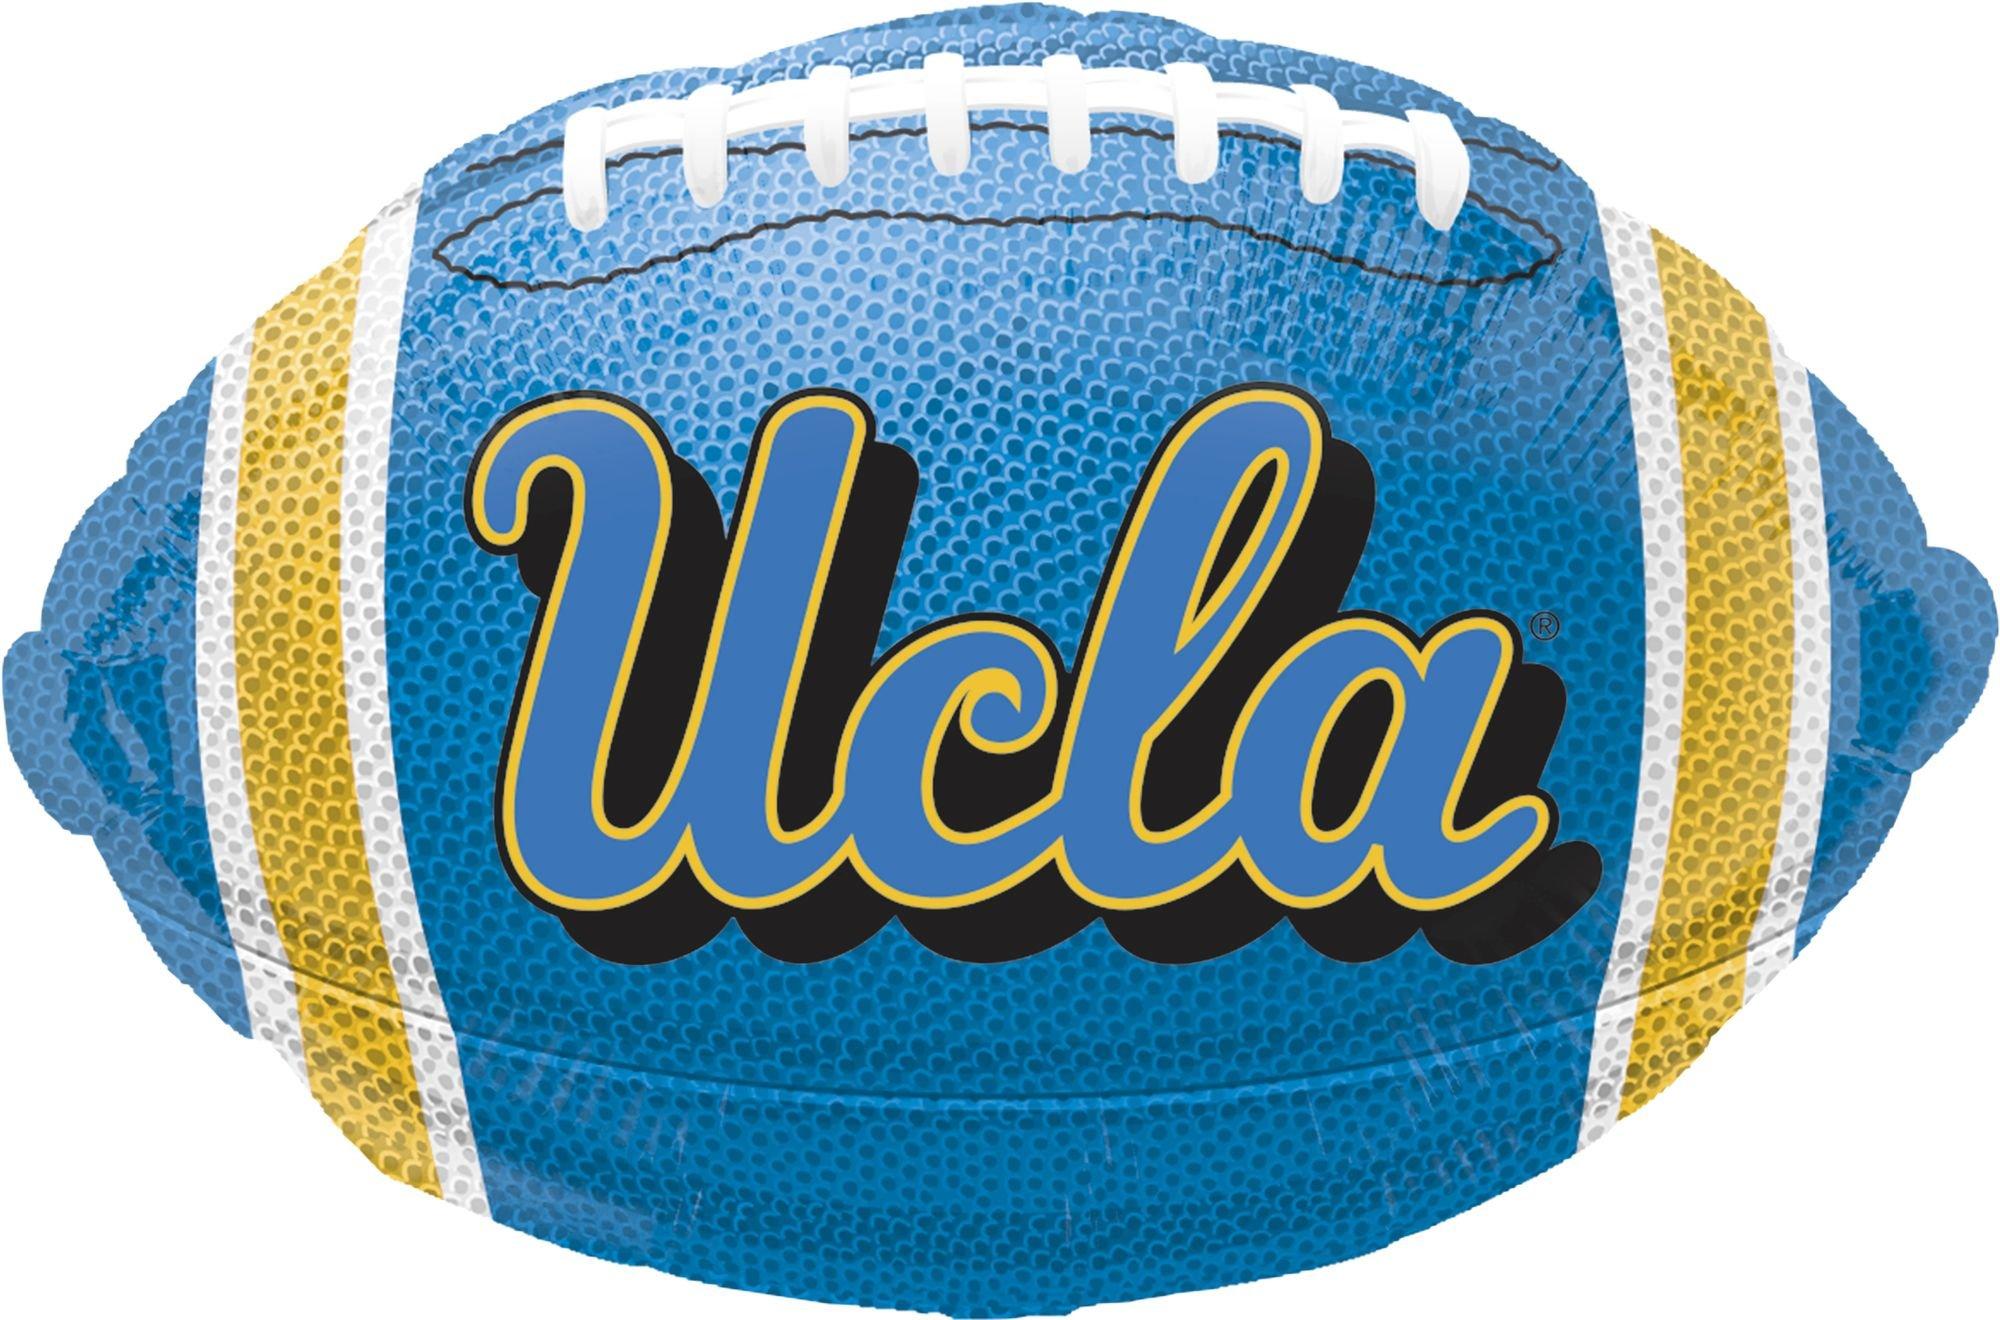 UCLA Bruins Balloon - Football